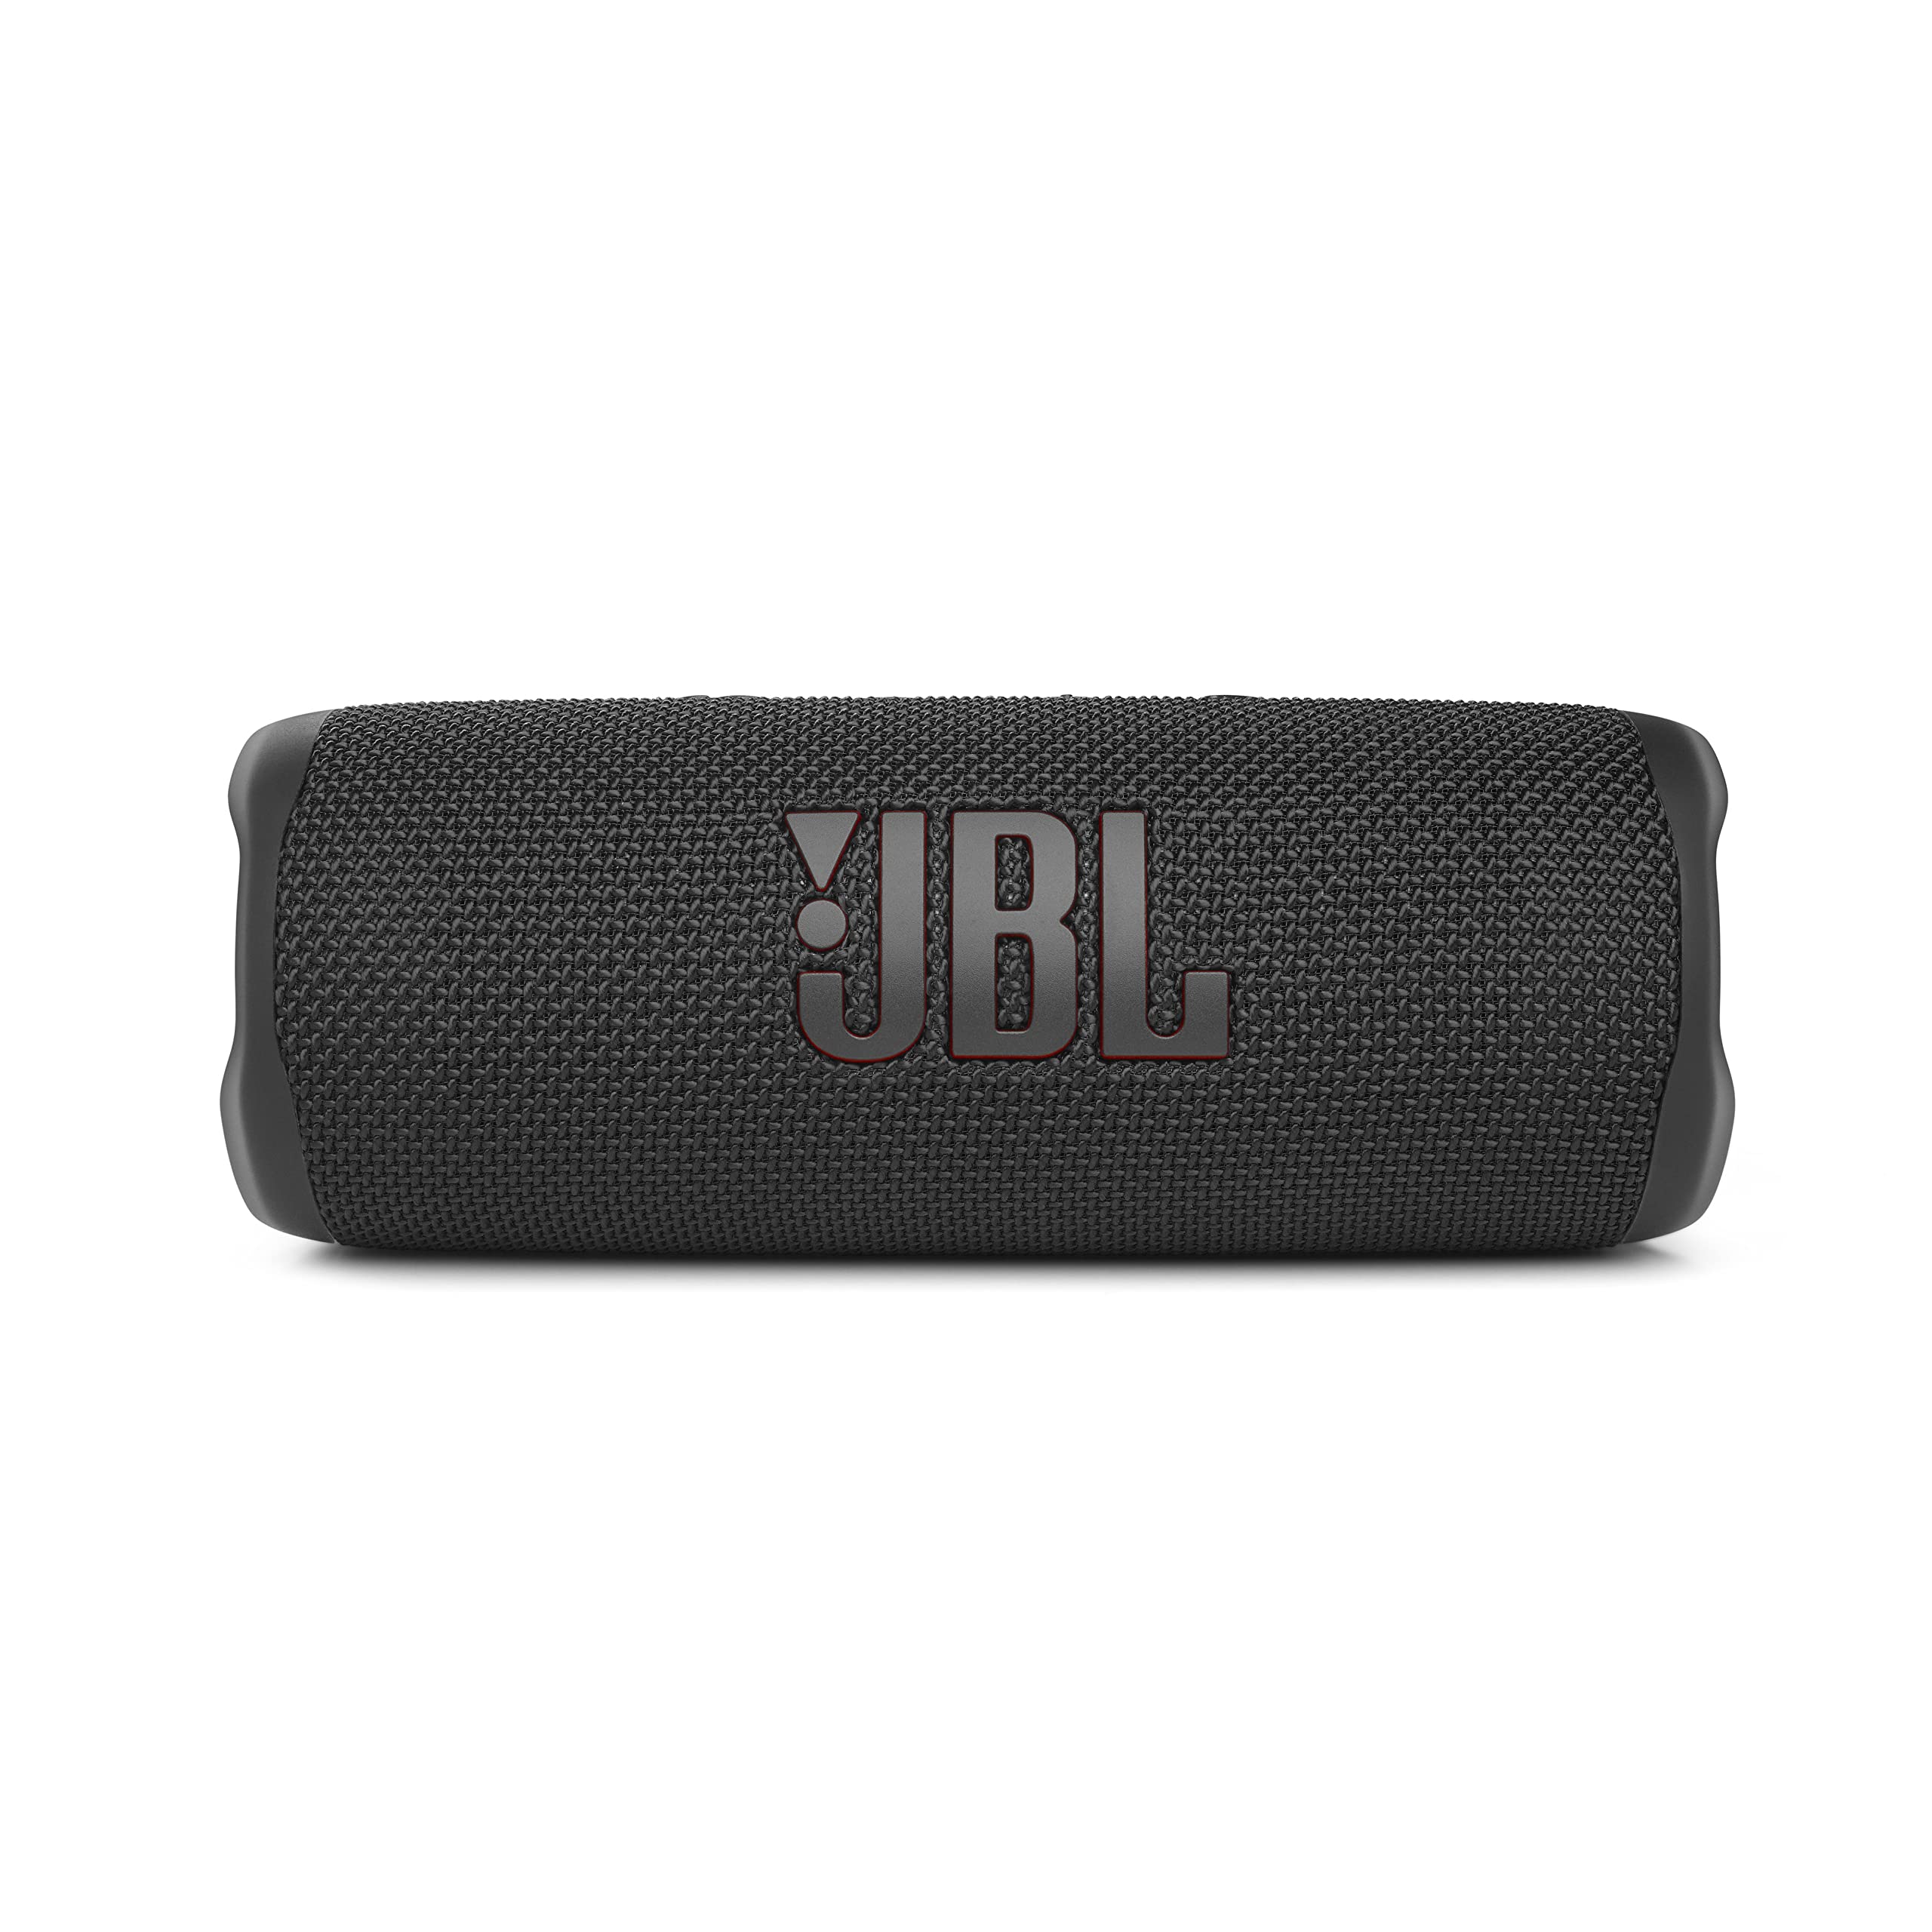  JBL Flip 6 - ポータブル Bluetooth スピーカー、パワフルなサウンドと重低音、IPX7 防水、12 時間の再生時間、家庭、アウトドア、旅行用の複数のスピー...